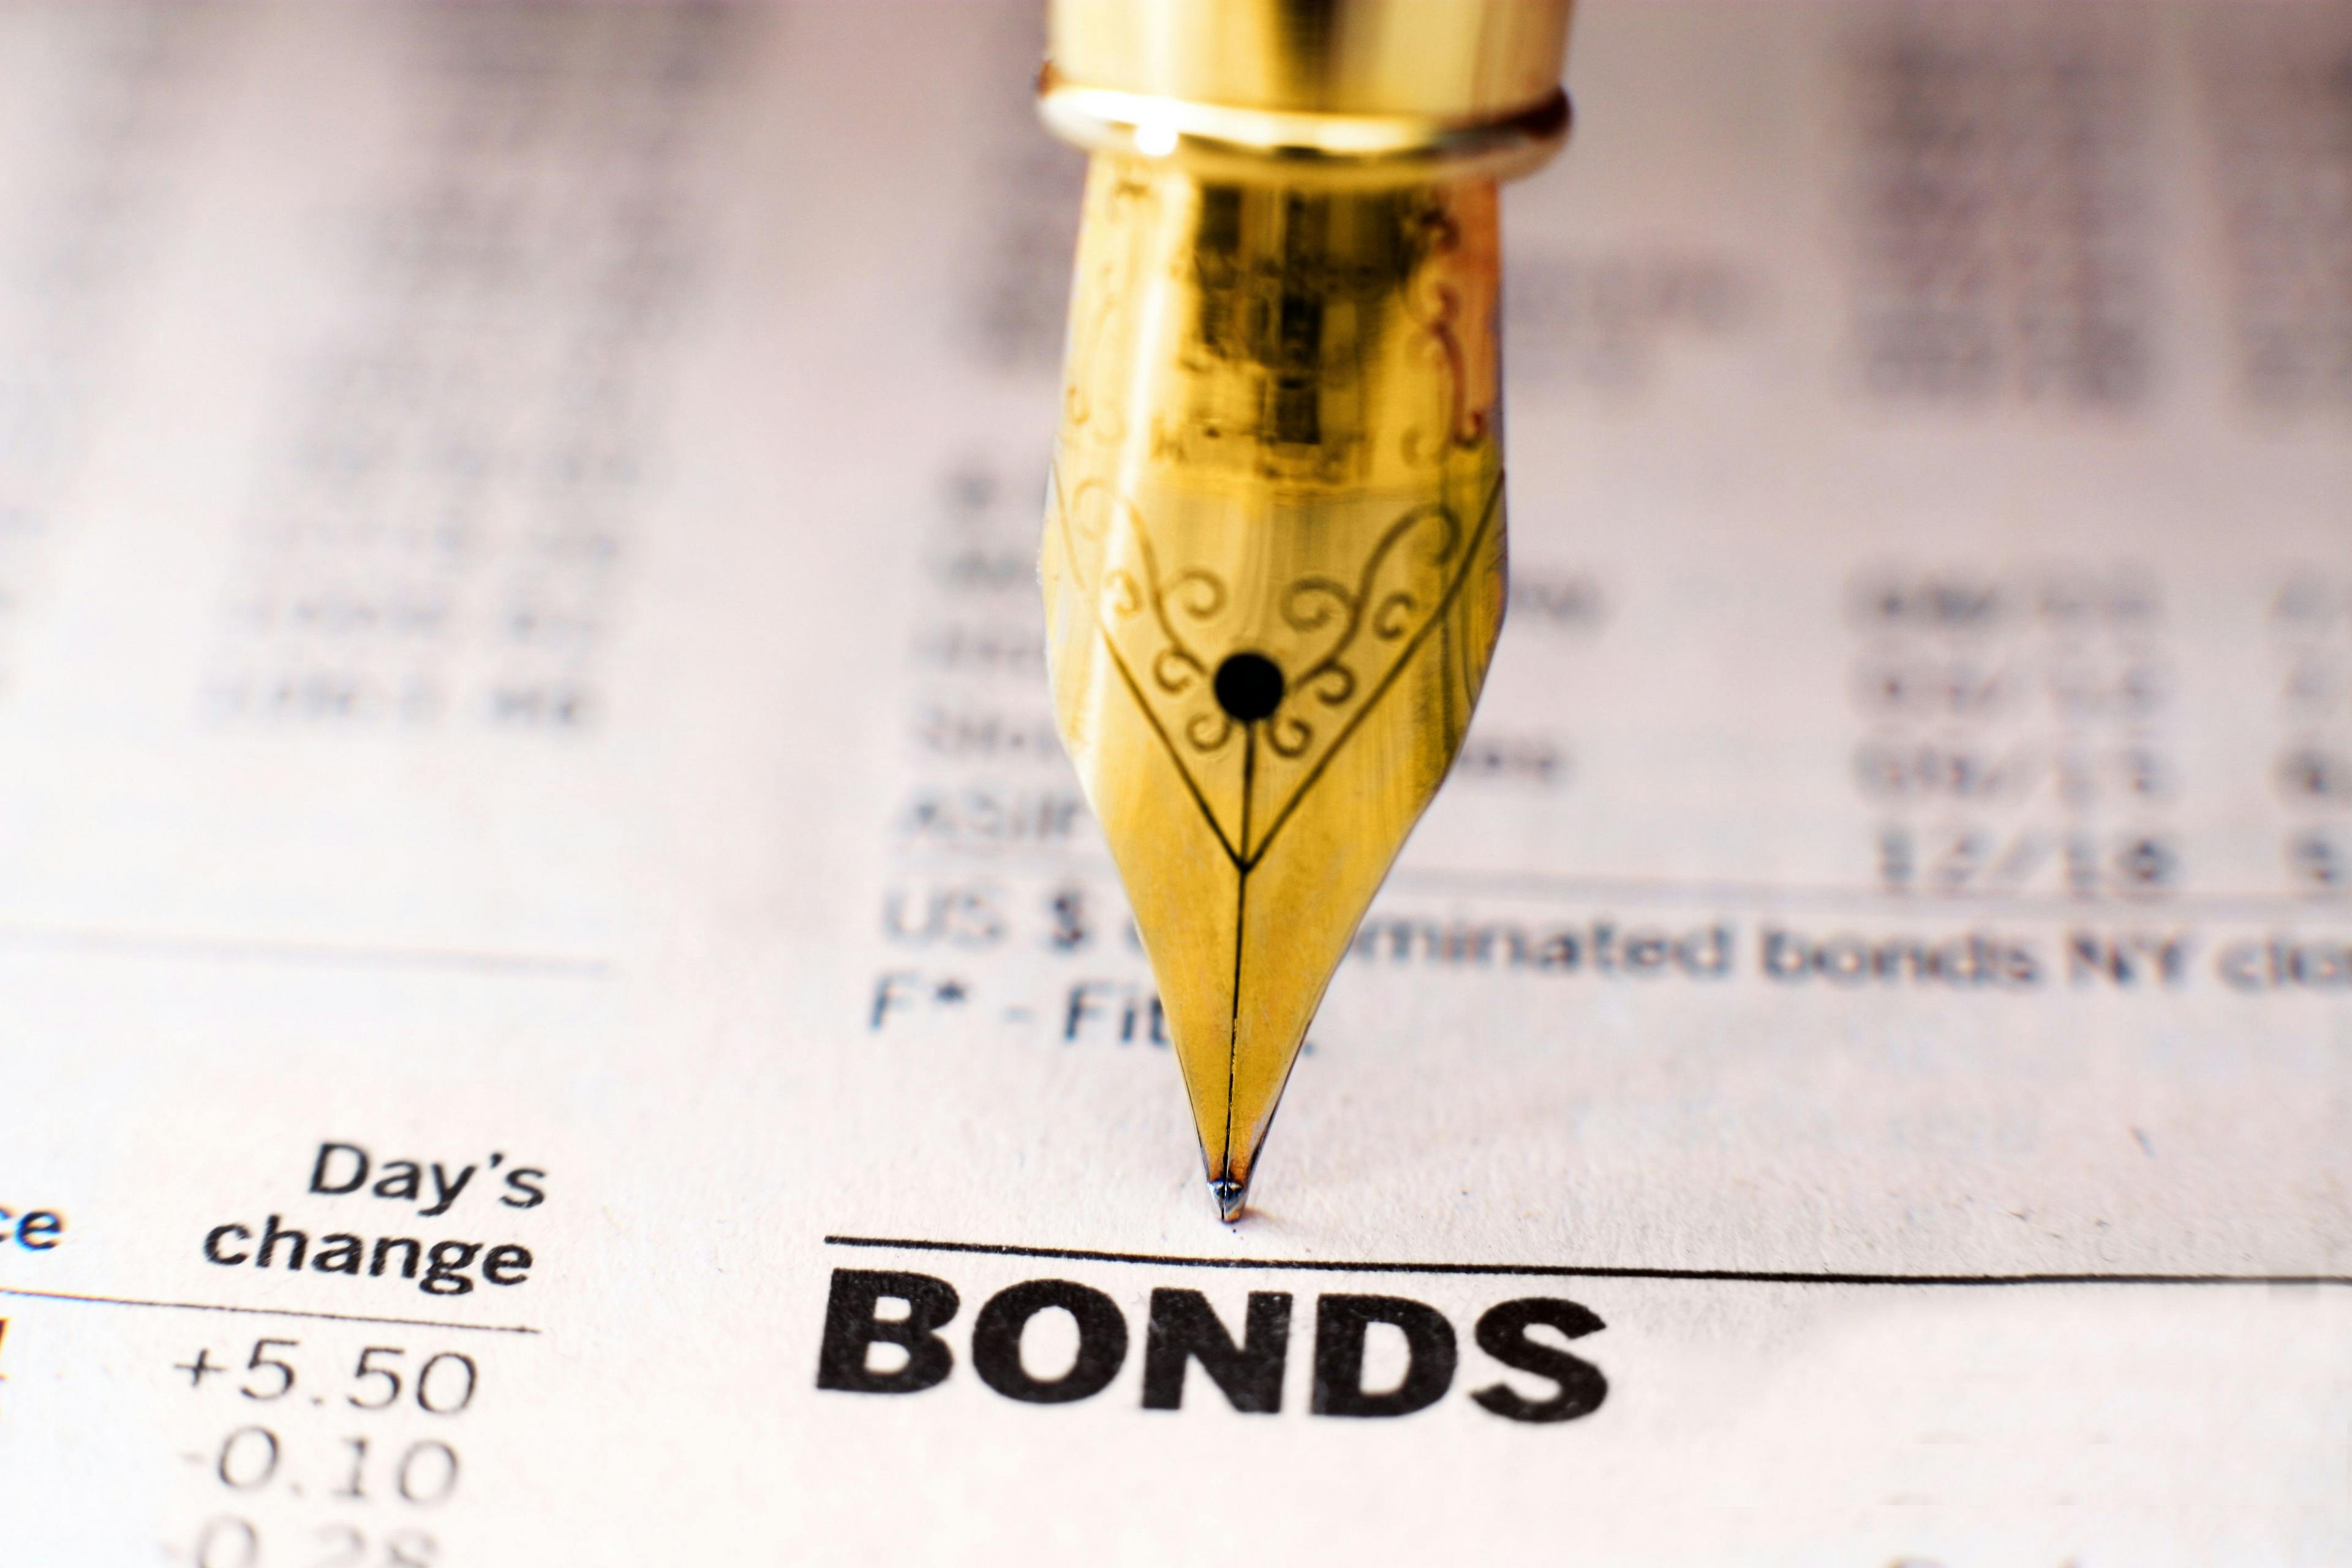 Building bond ladders eases investor angst